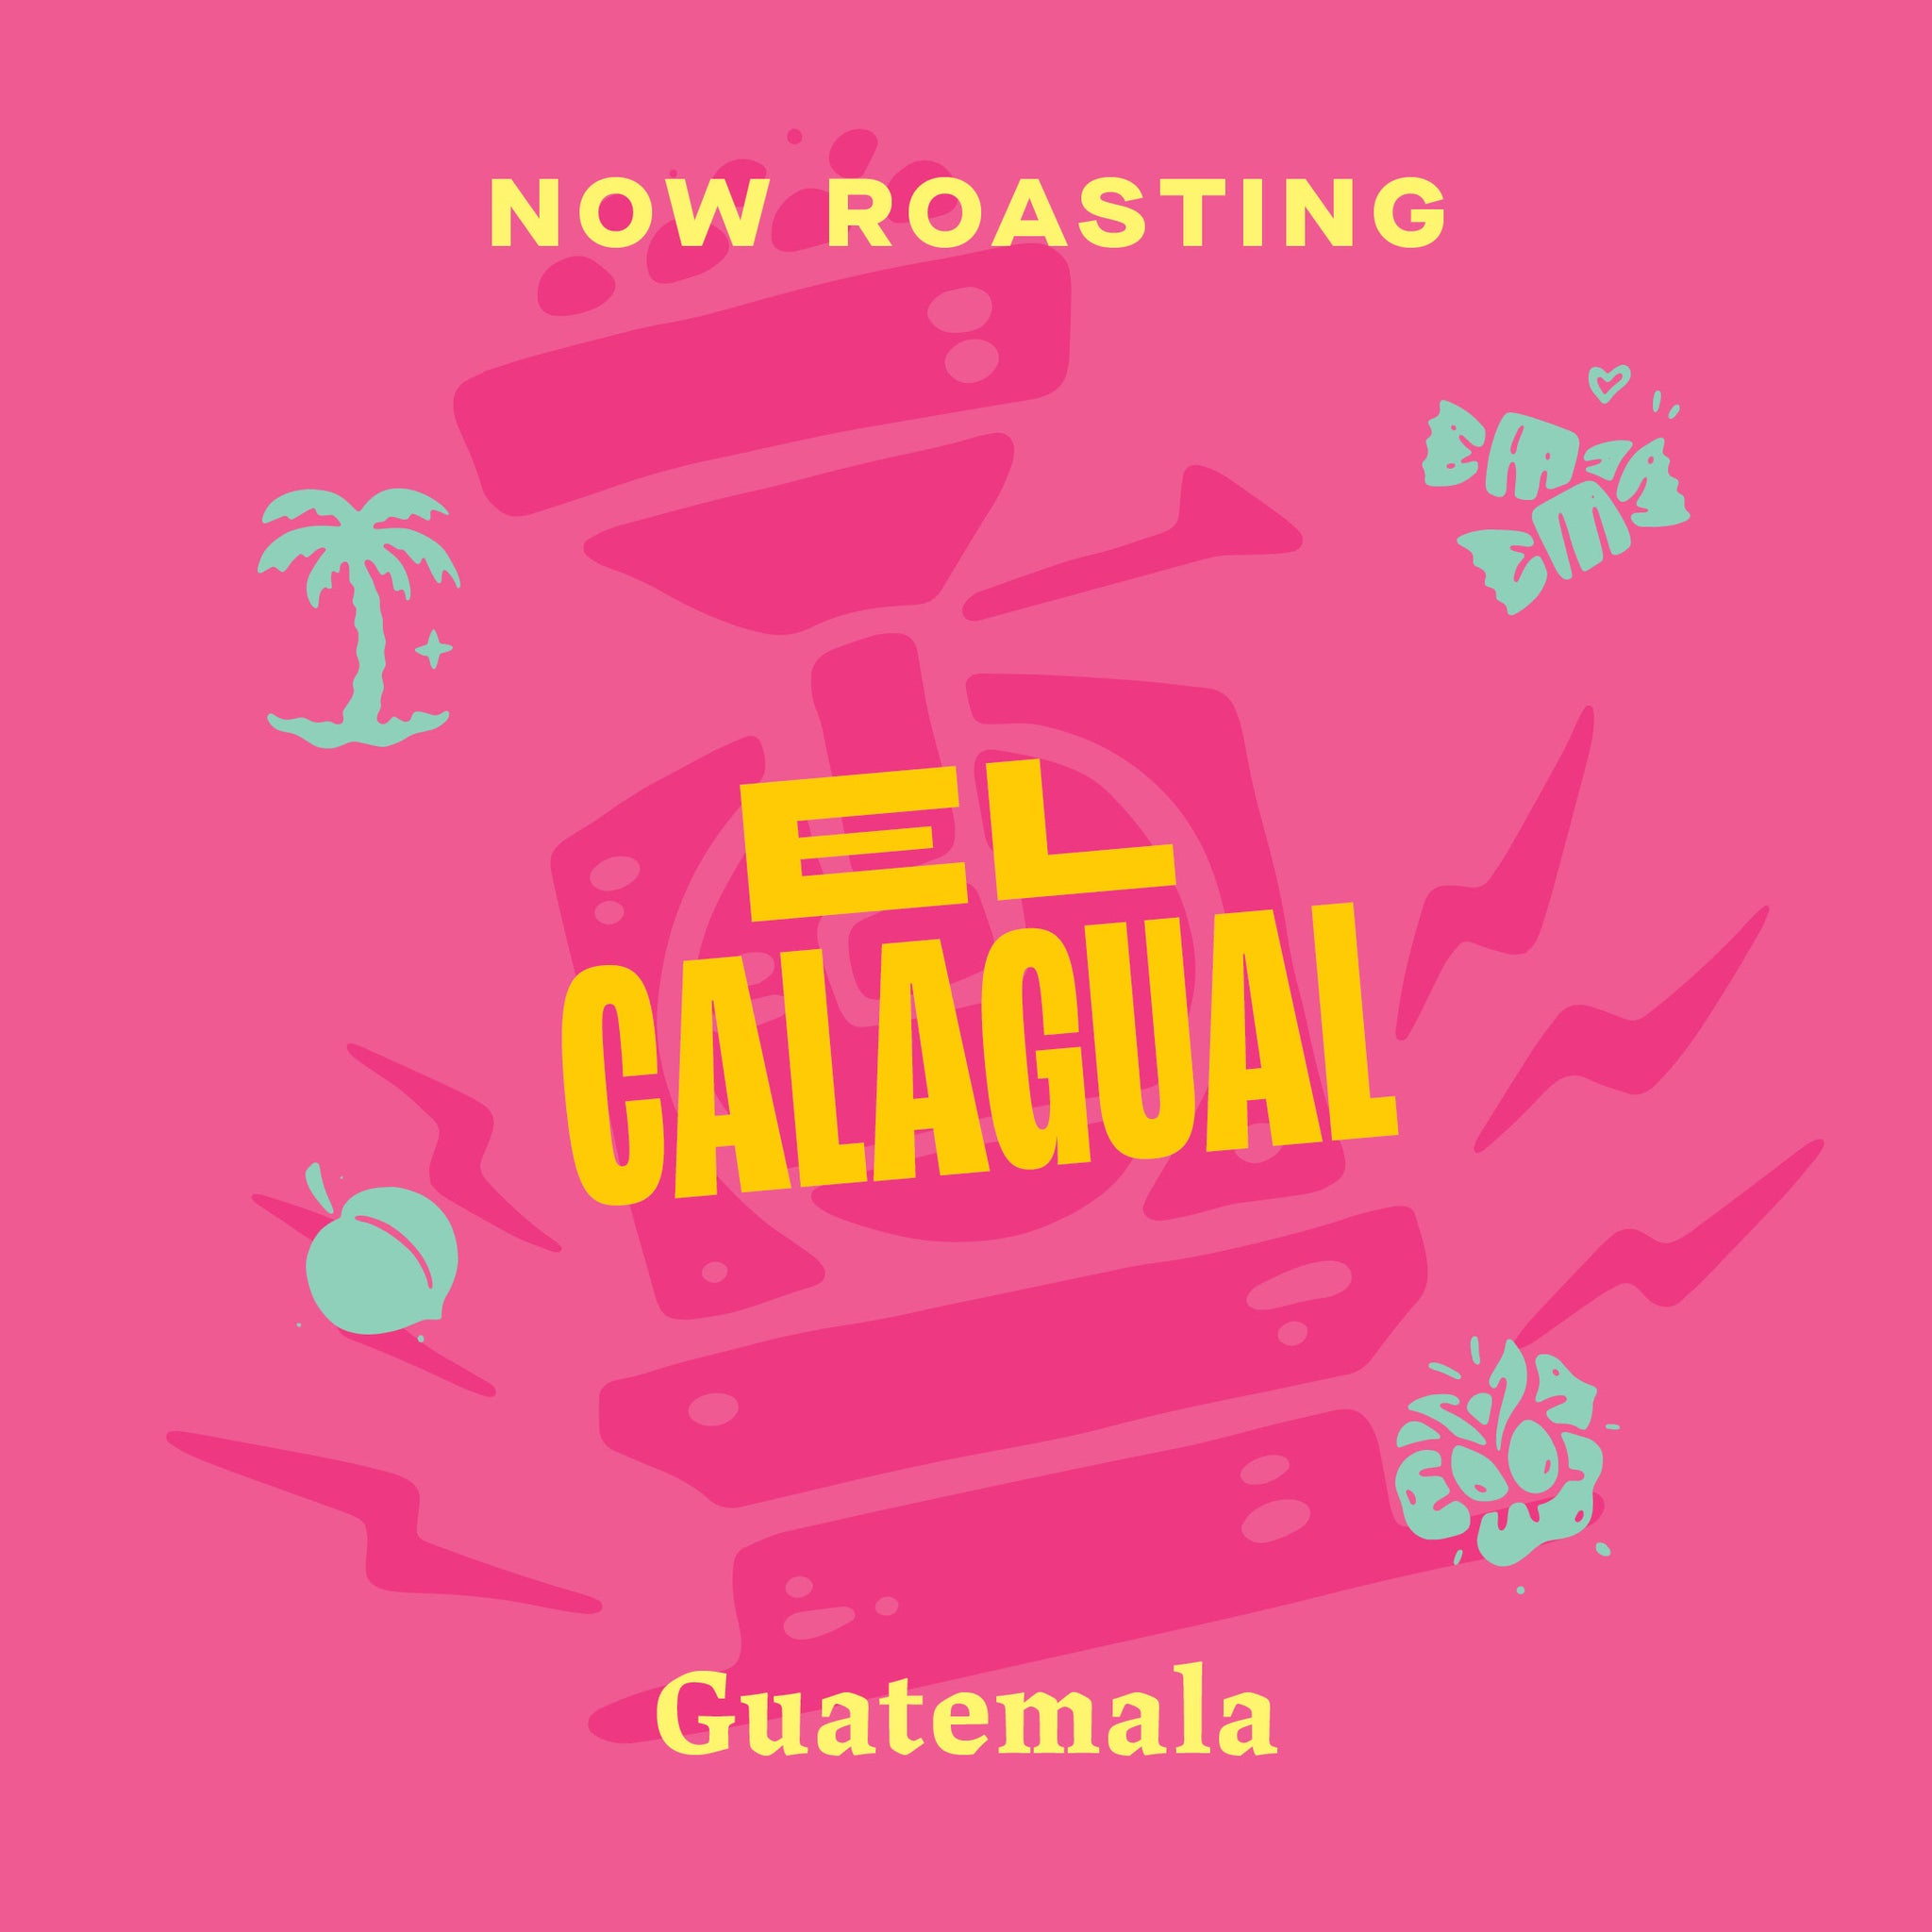 El Calagual | Guatemala